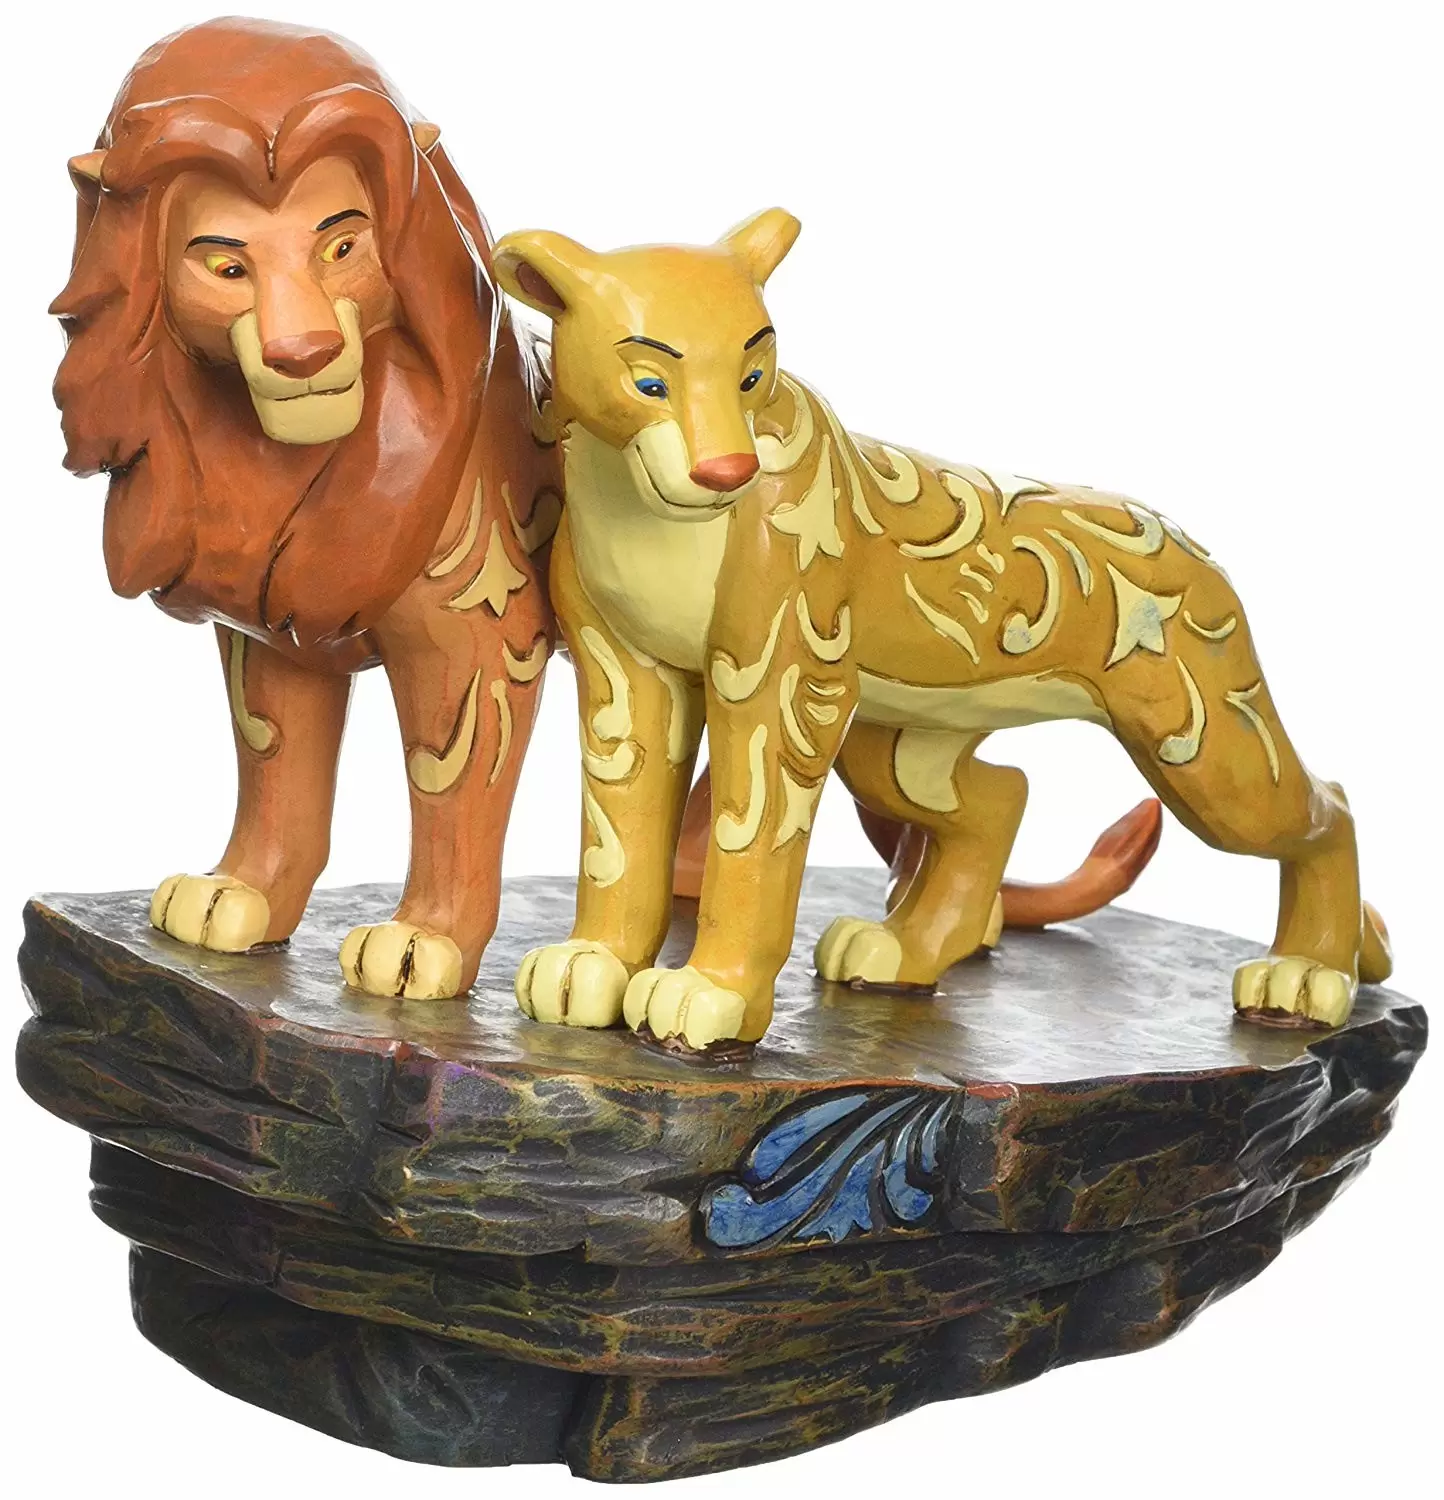 Simba and Nala Love At Pride Rock - figurine 4040432 Disney Traditions by  Jim Shore